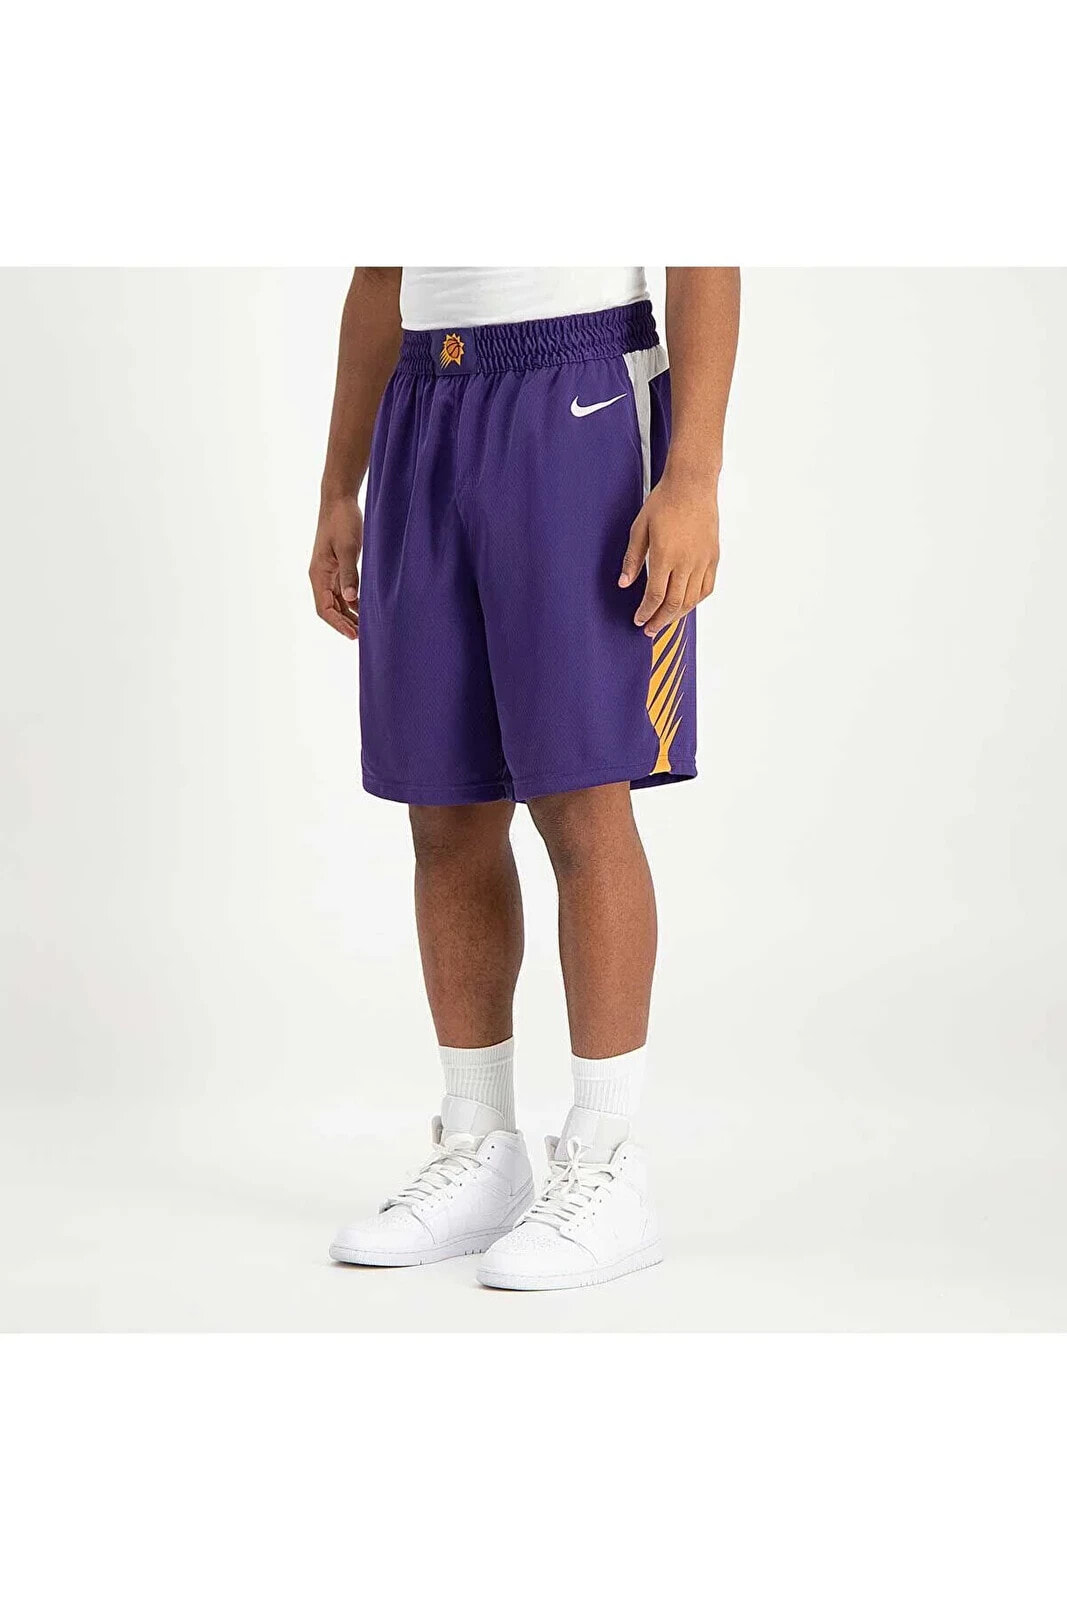 Phoenix Suns Icon Edition Nike Dri-FIT Basketbol NBA Swingman Erkek Şortu